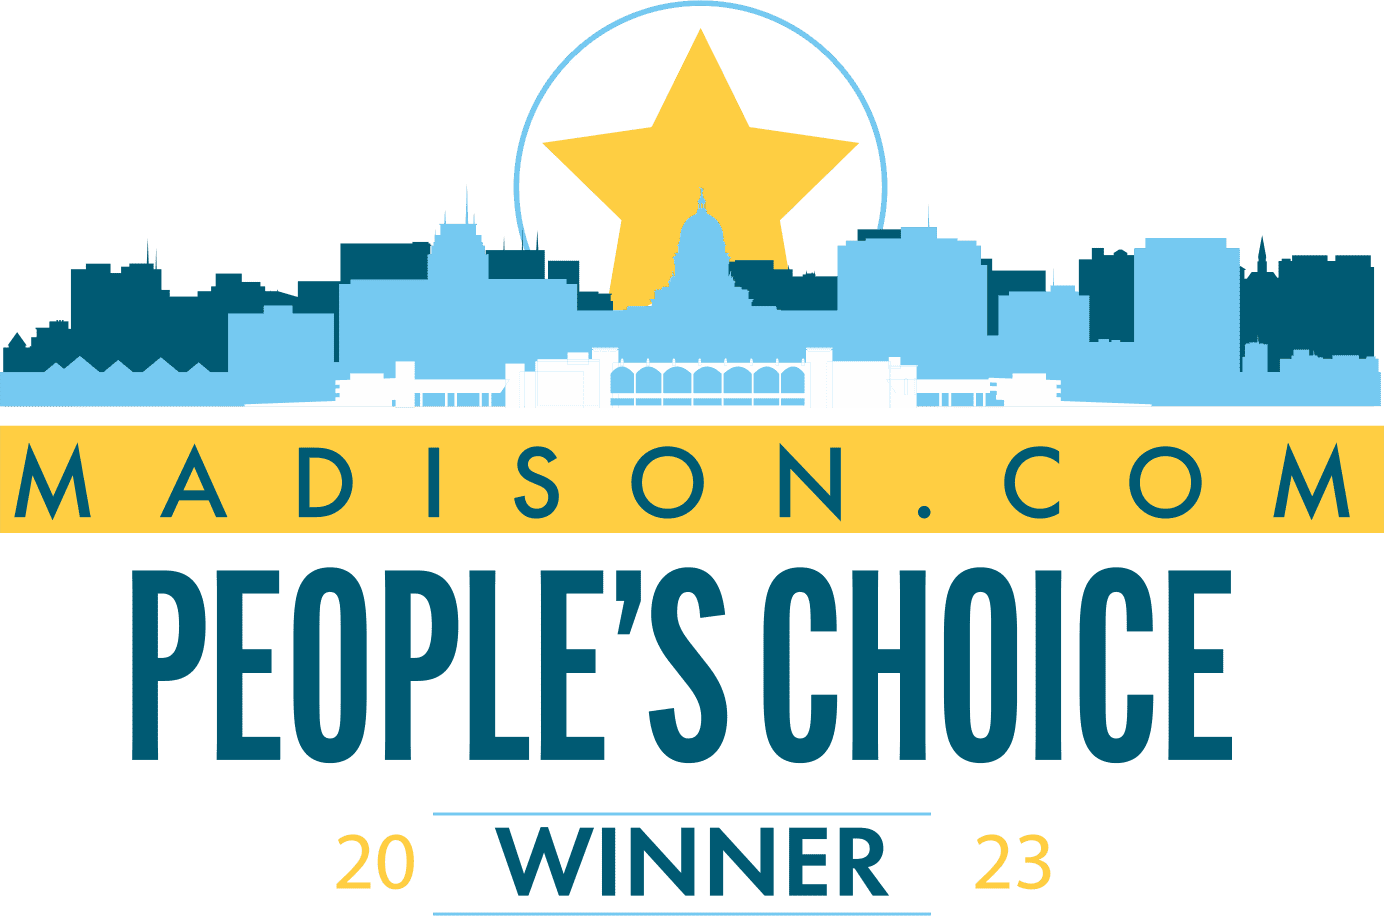 Madison.com peoples choice winner 2023